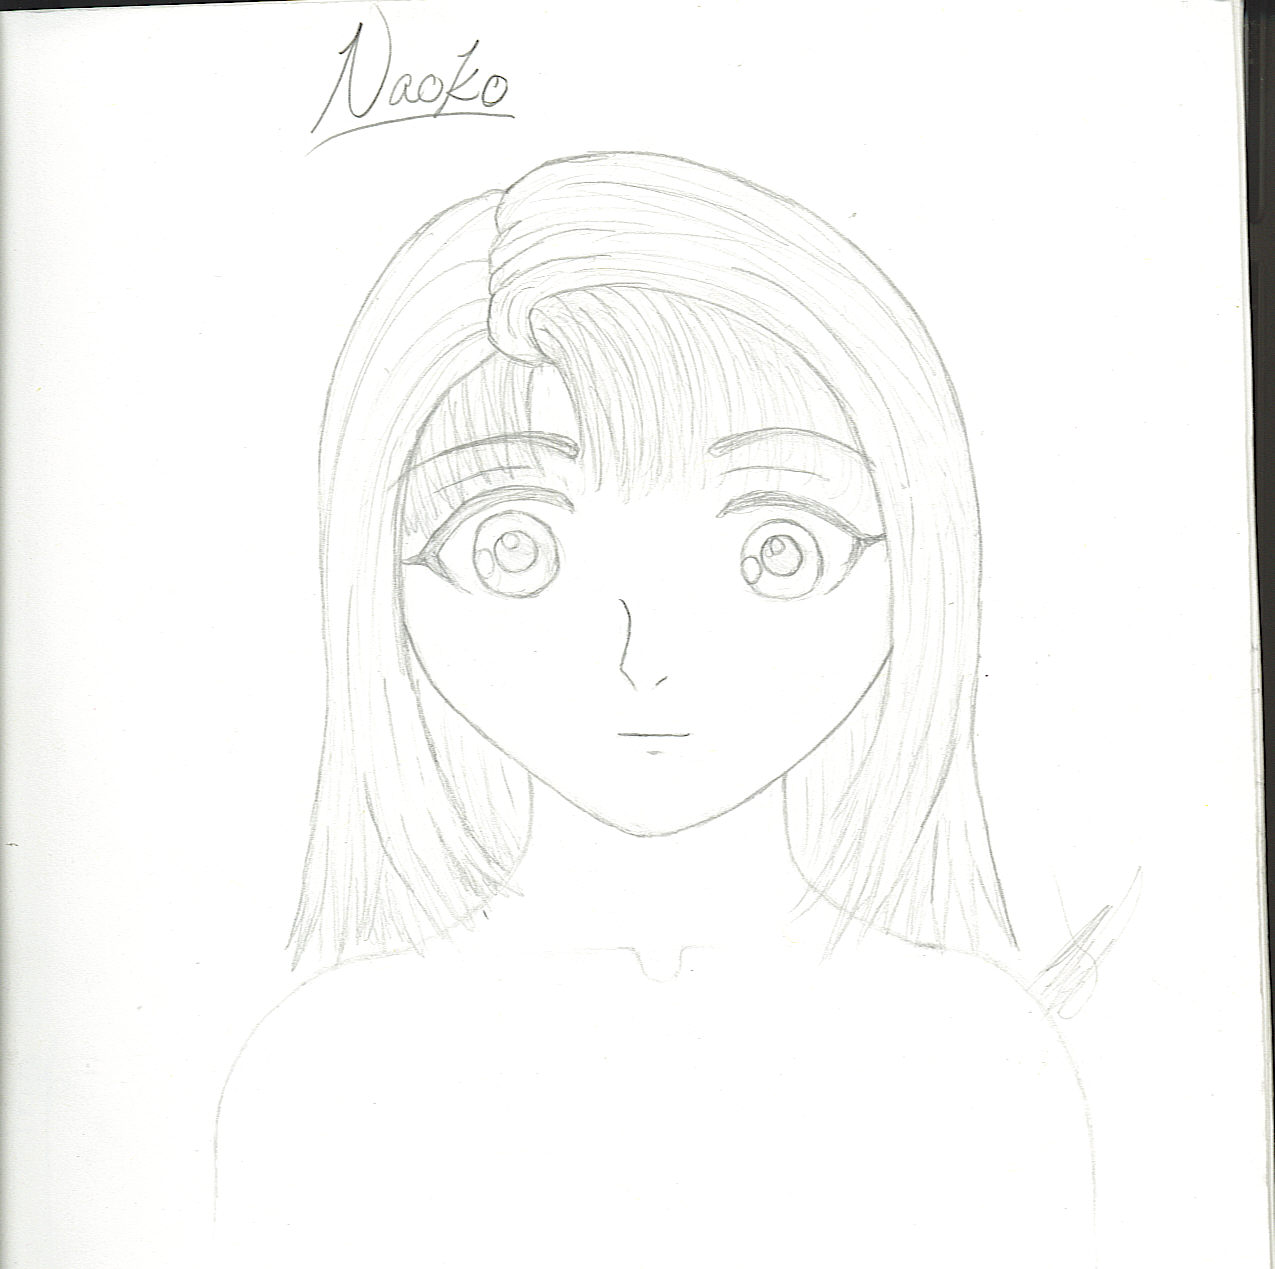 Naoko by Kurai_greenbird